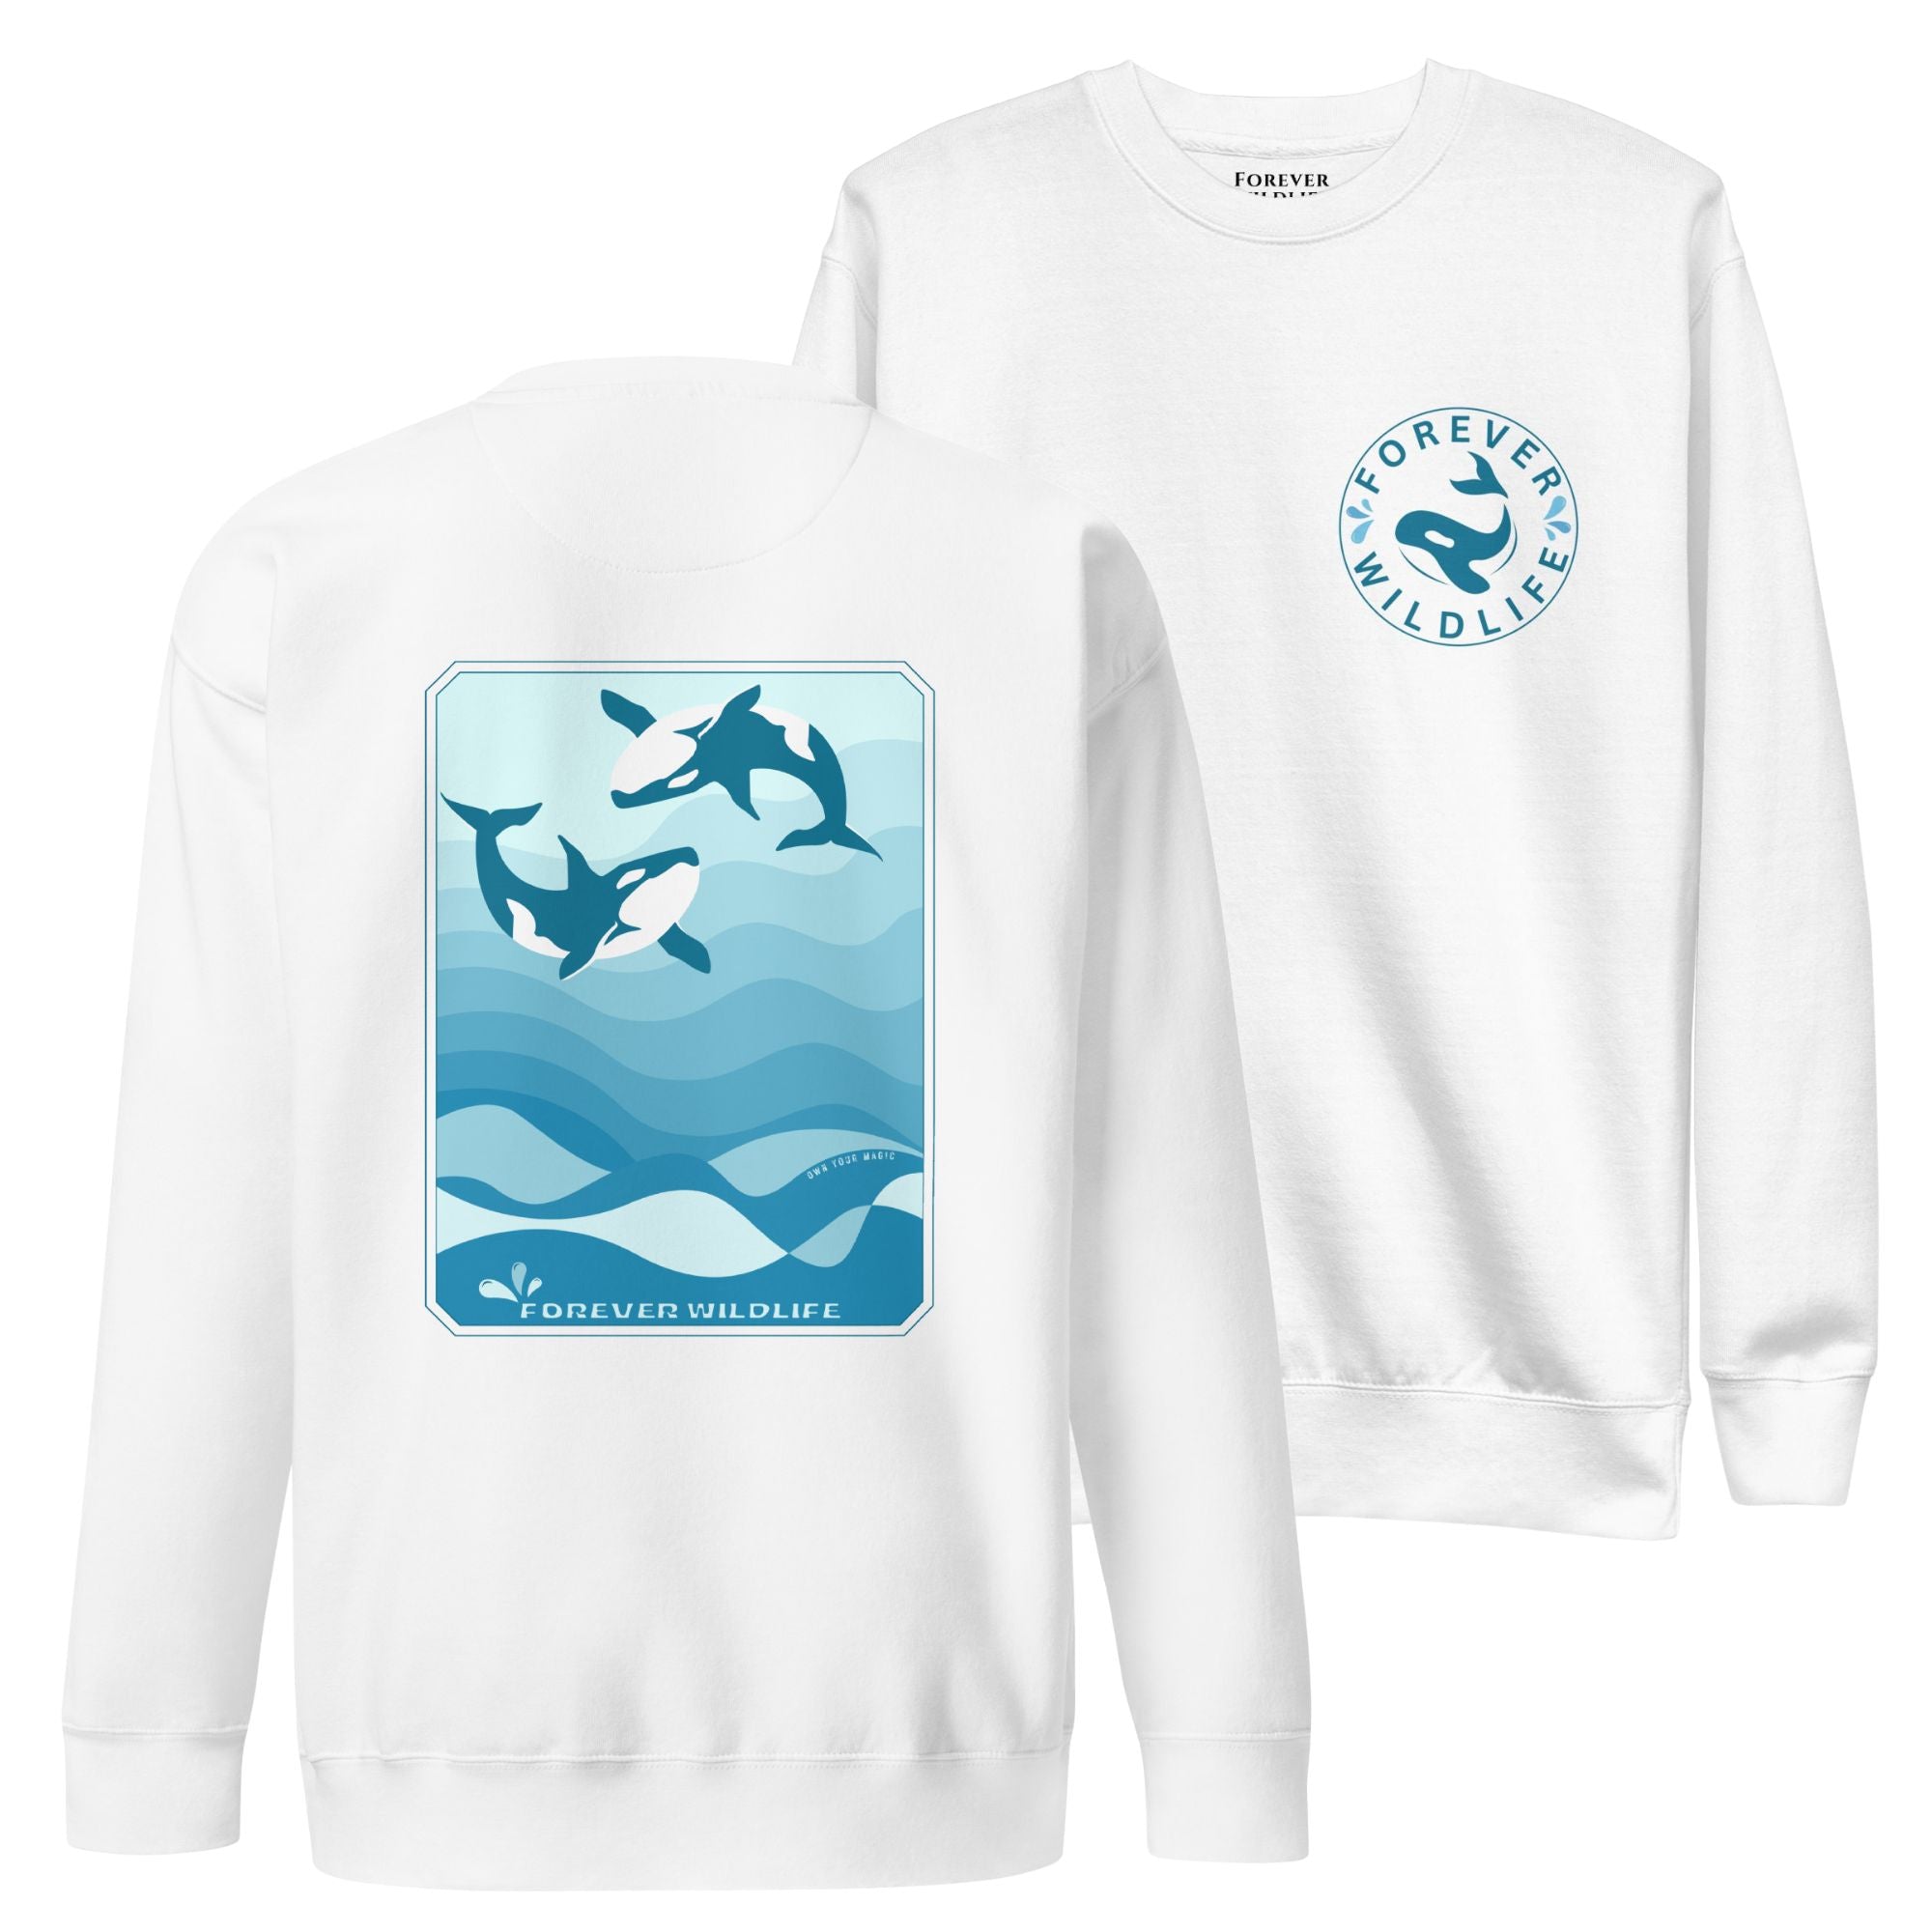  Orca Sweatshirt, beautiful White Orca Sweatshirt with Killer Whales on the sweatshirt by Forever Wildlife selling Wildlife Sweatshirts.